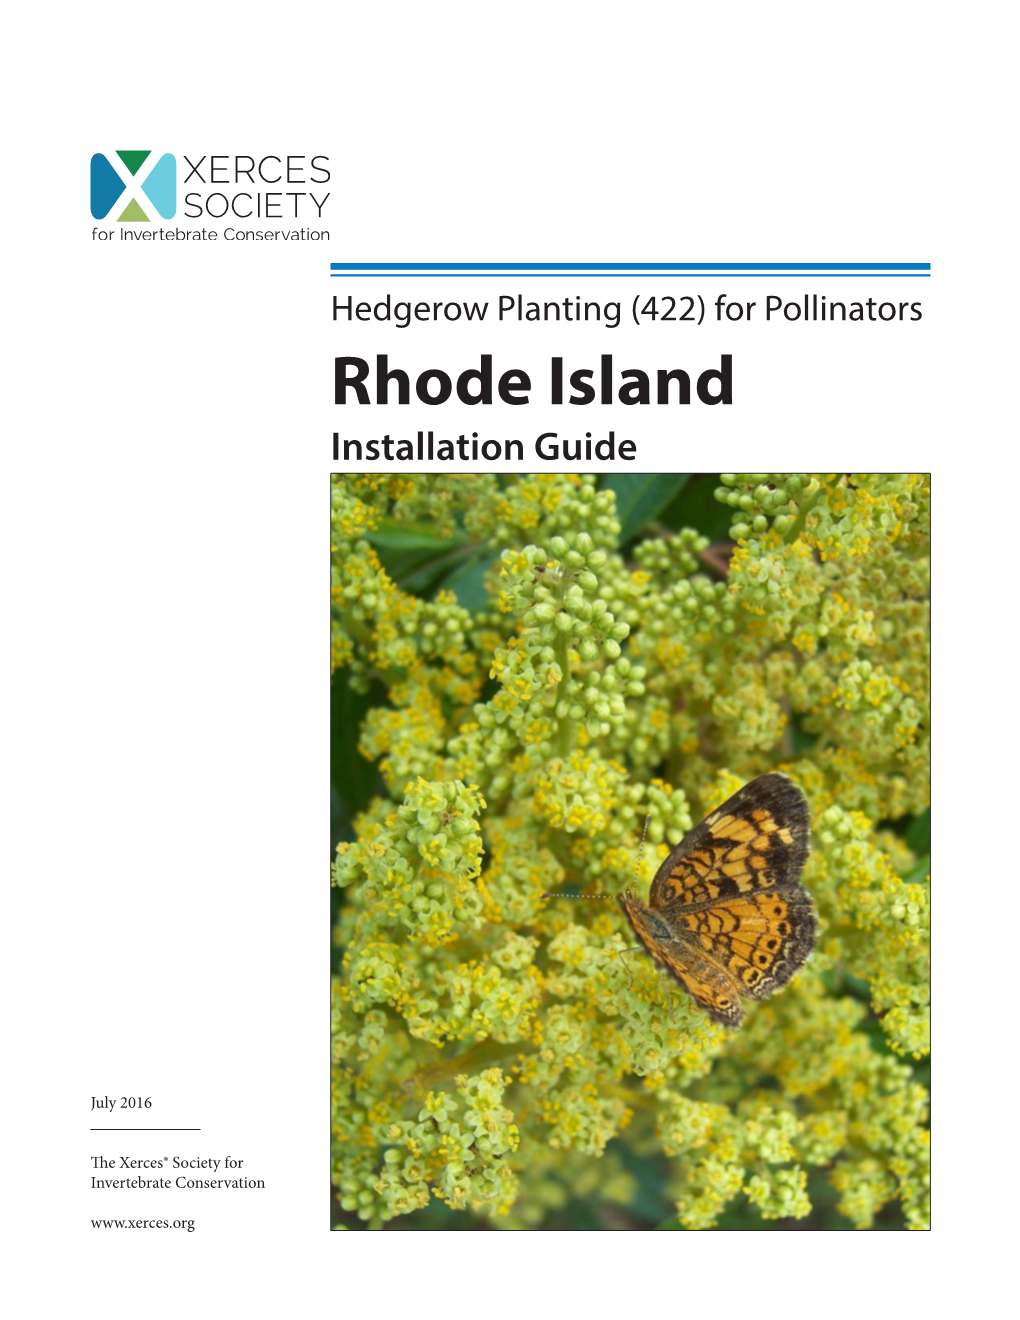 Rhode Island Installation Guide